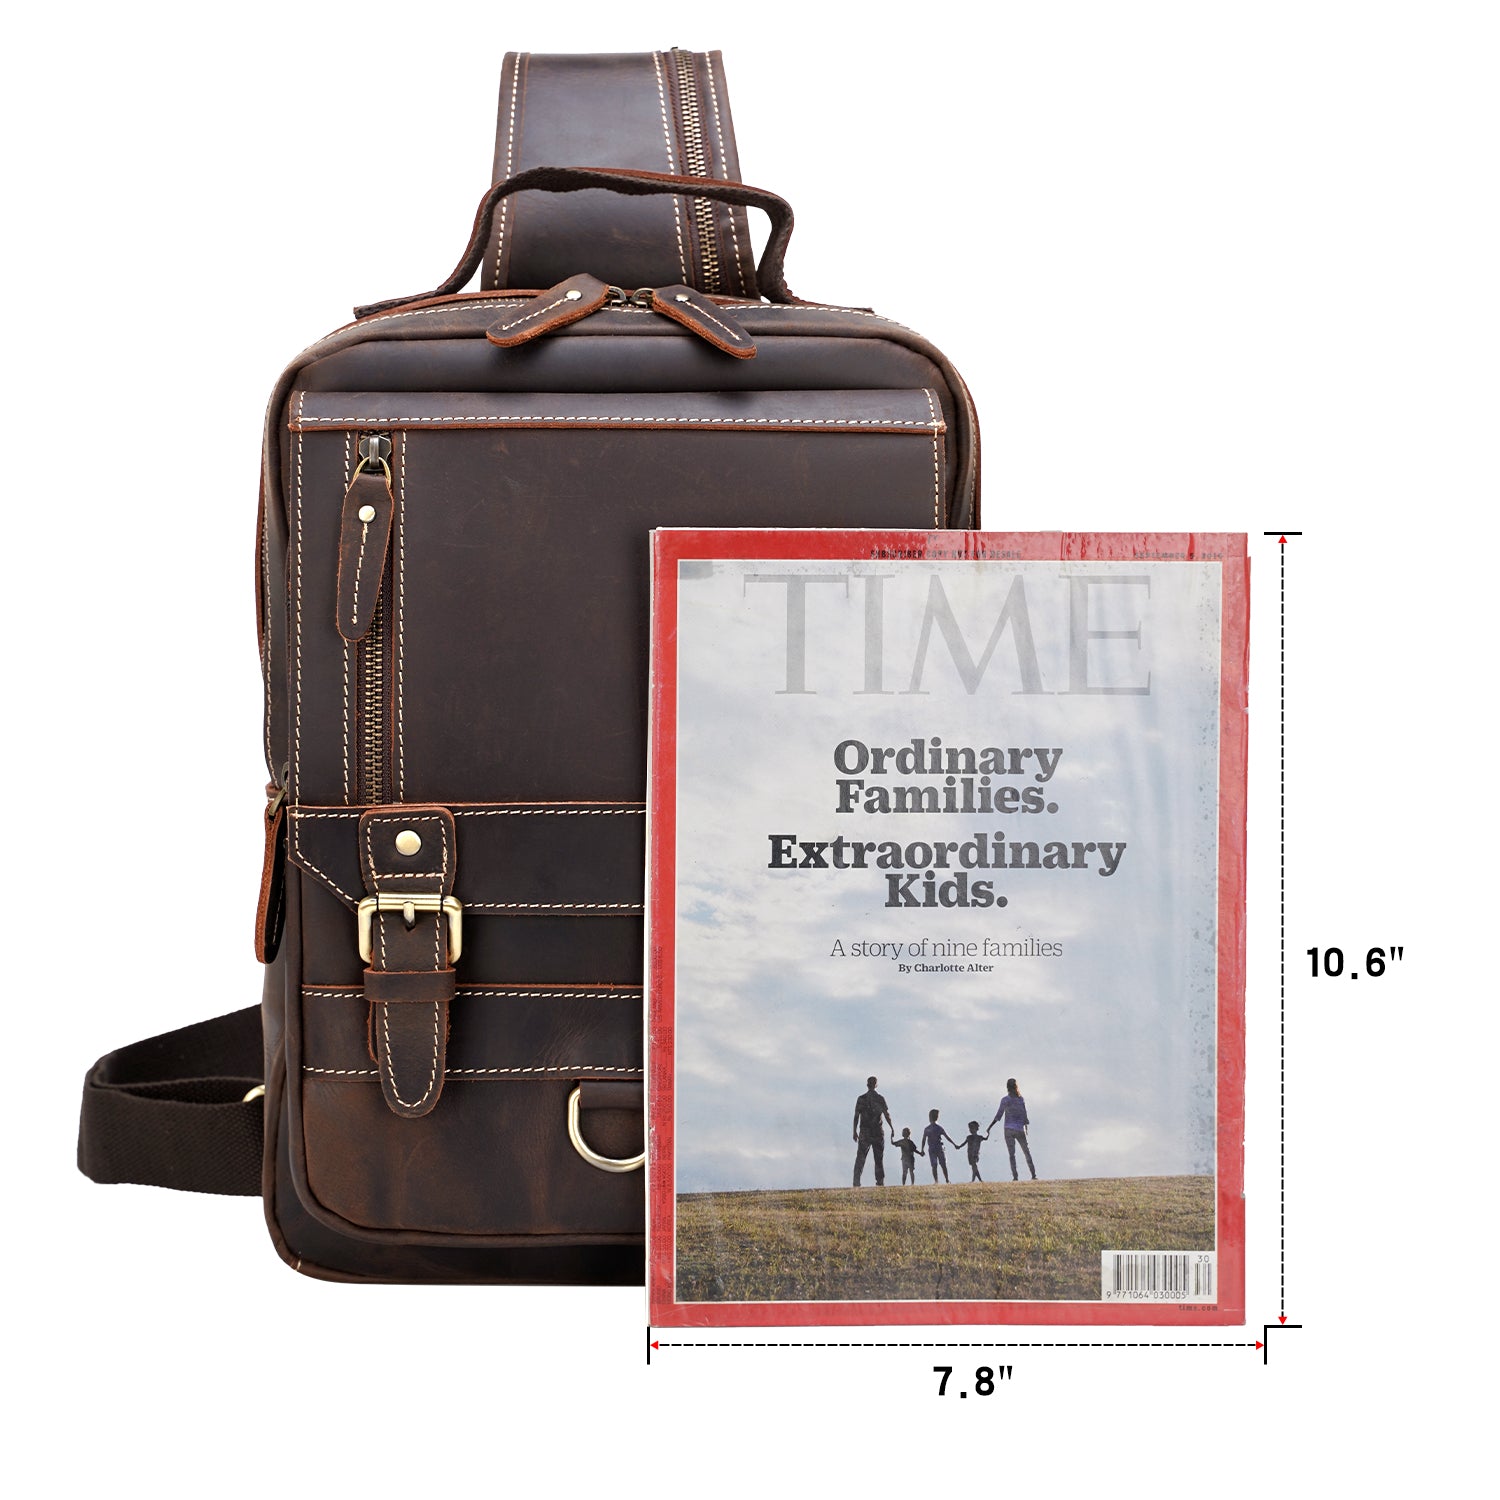 Polare Full Grain Leather Sling Bag Travel/Hiking Bike Multi-Purpose C